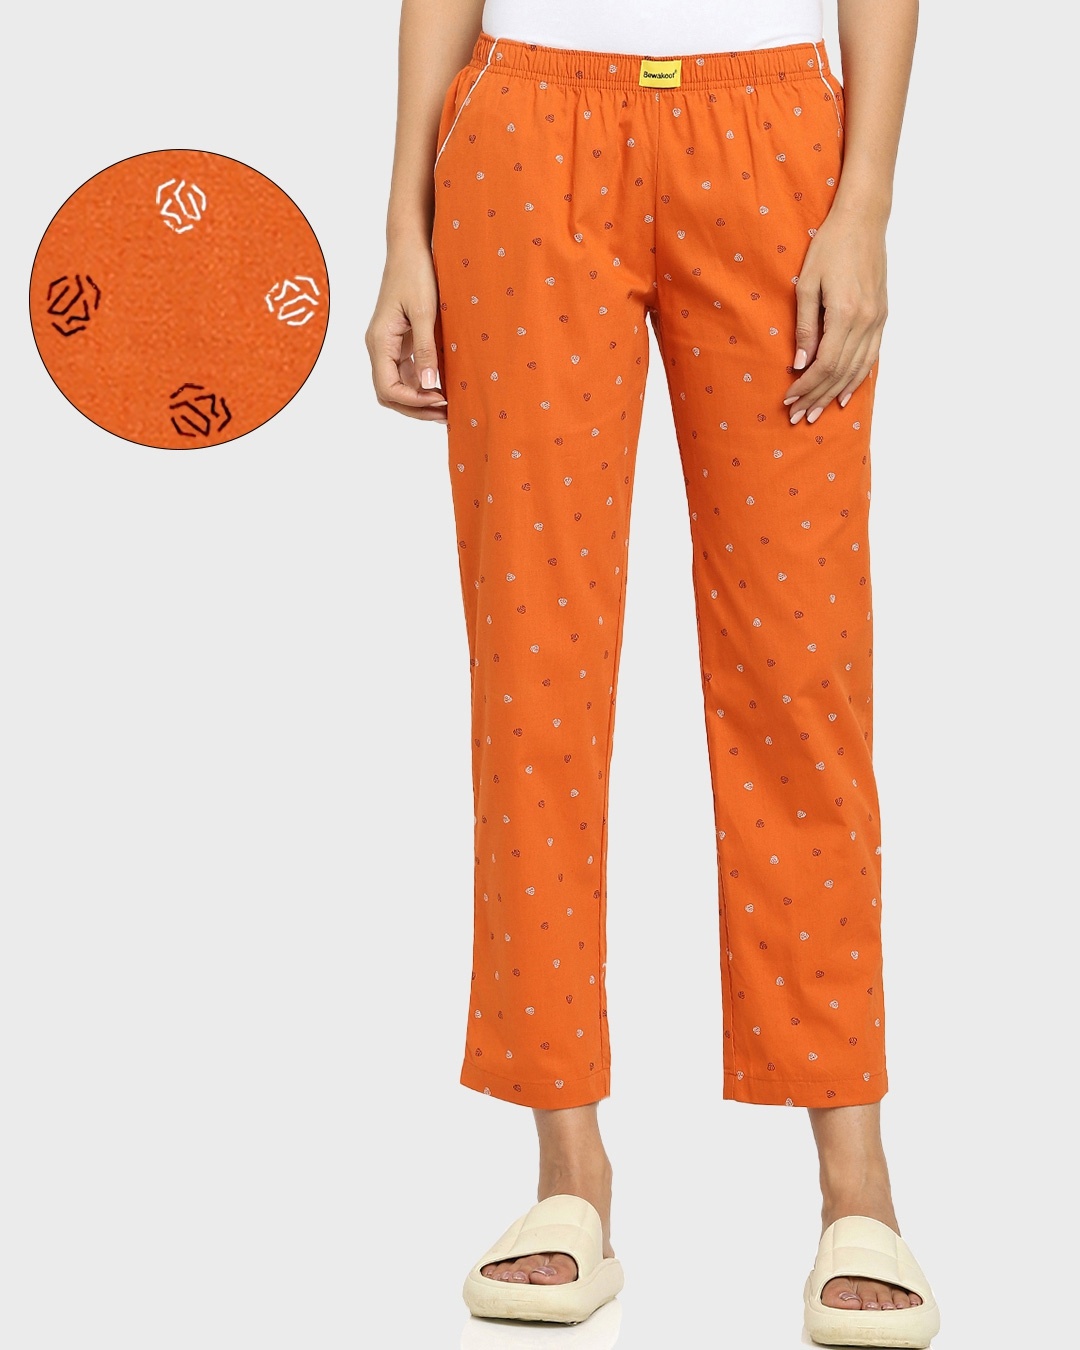 Shop Orange AOP Geometric Print E Pyjama-Front